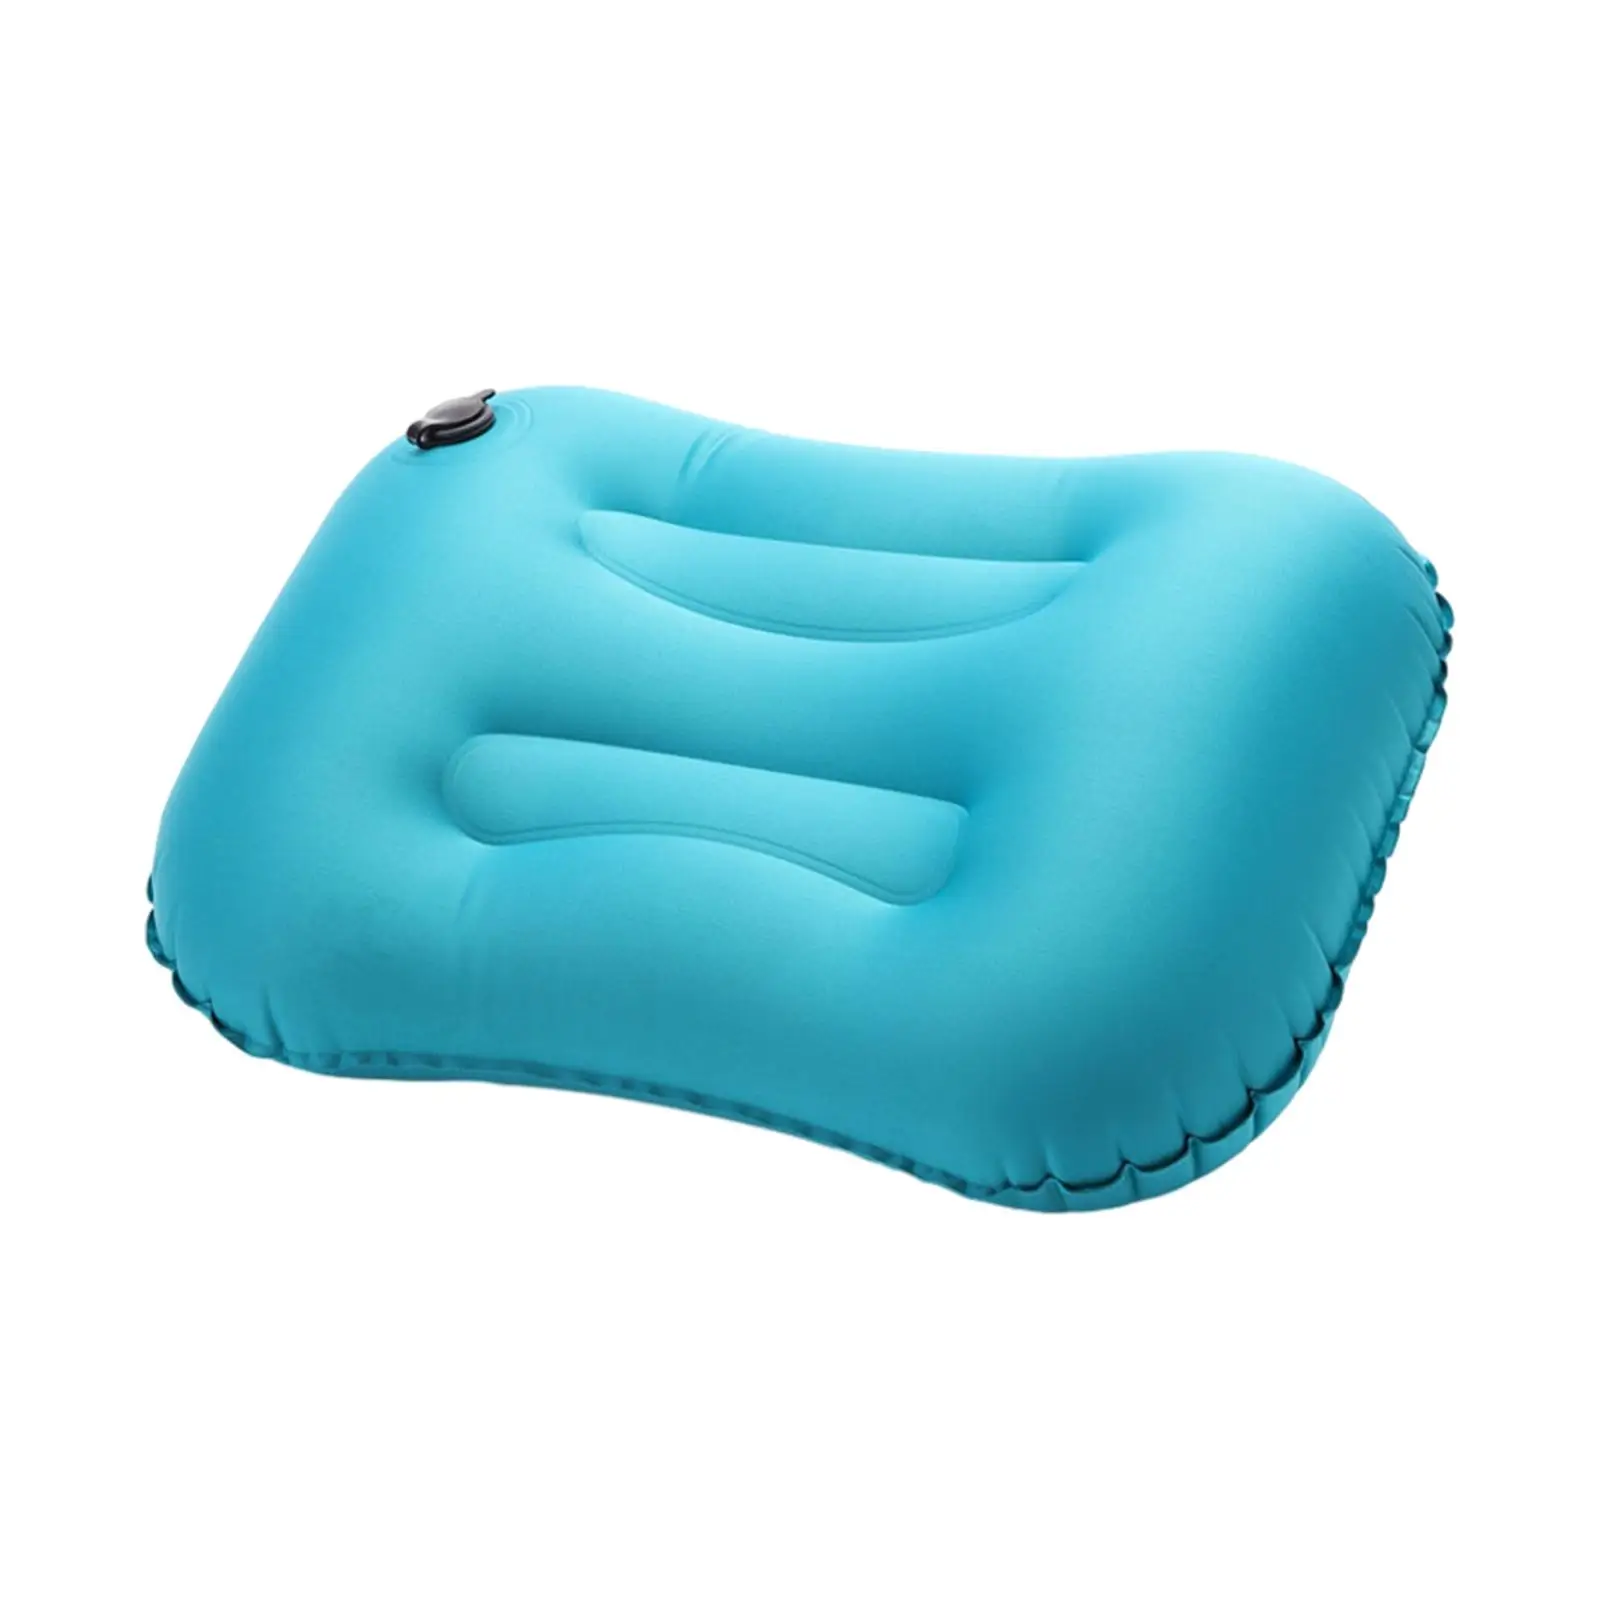 Inflatable Camping Pillow Plane Air Pillow Sleeping Pillow Lightweight Travel Pillow Blow up Air Pillow for Outdoor Traveling